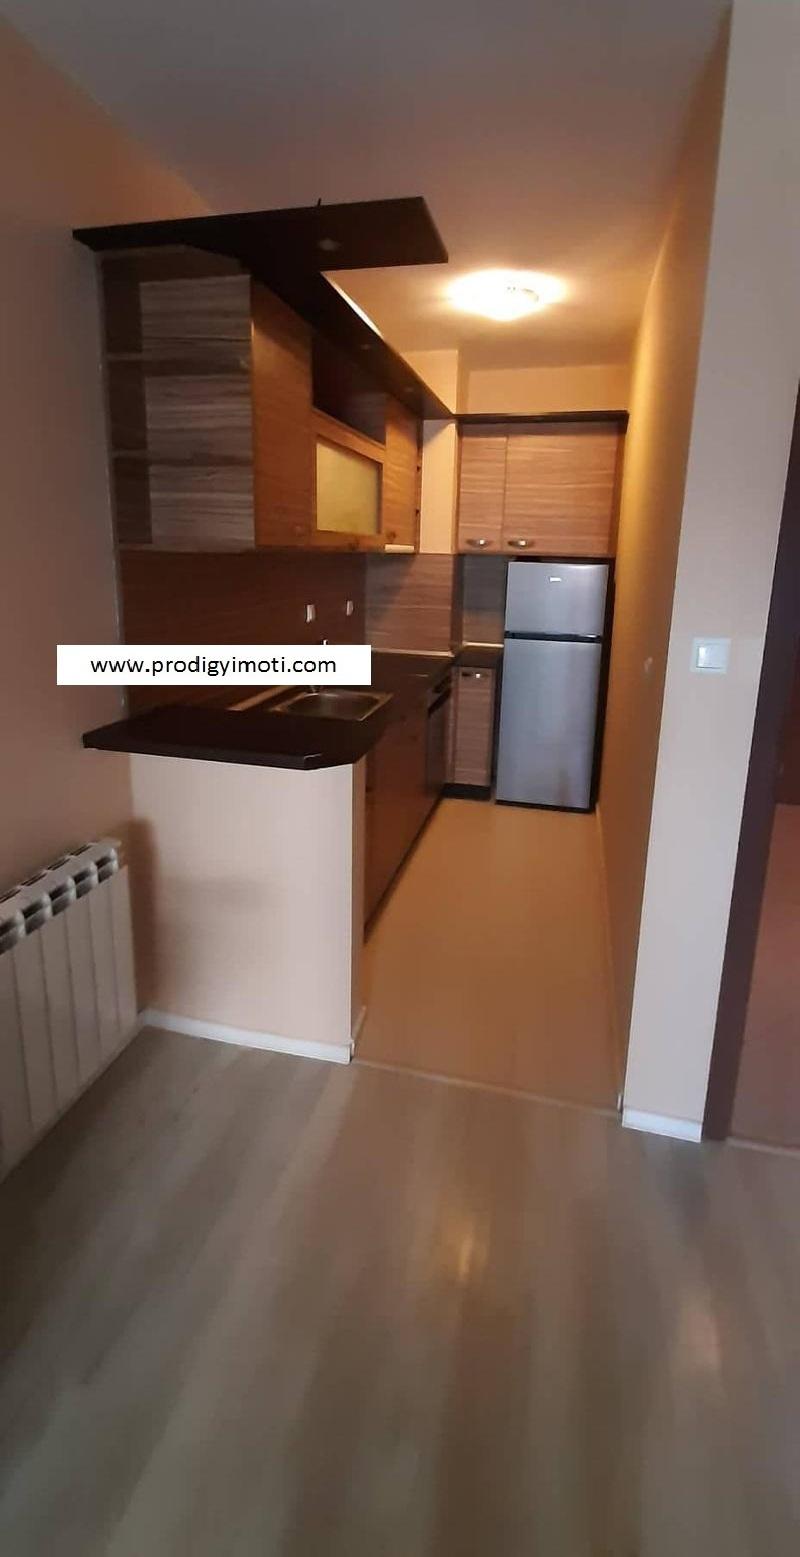 Rent 1-bedroom  Sofia - Ovcha Kupel 65m²